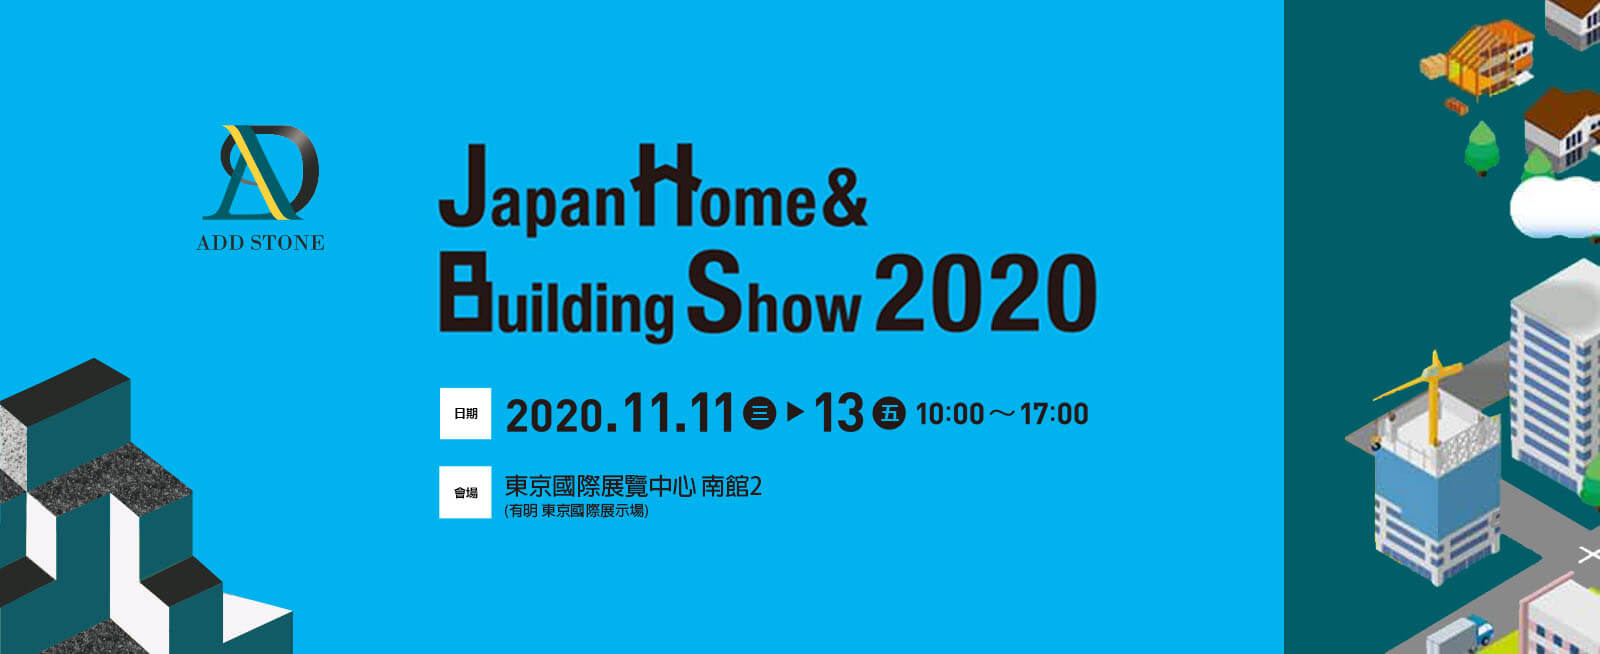 ADD STONE 參加2020/11/11日本東京國際展覽中心舉辦的JHBS展覽